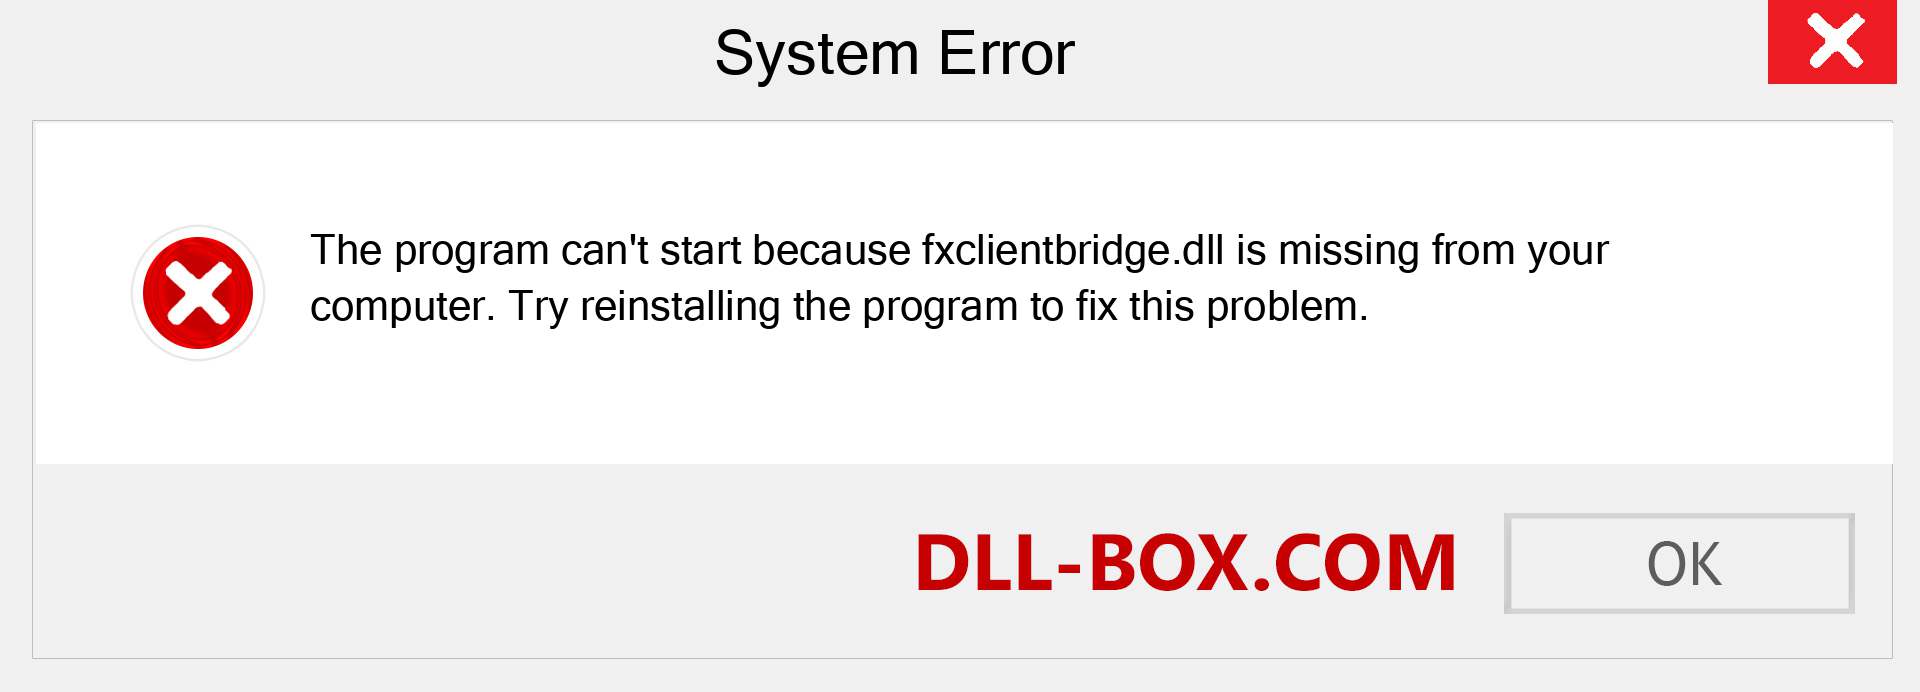  fxclientbridge.dll file is missing?. Download for Windows 7, 8, 10 - Fix  fxclientbridge dll Missing Error on Windows, photos, images